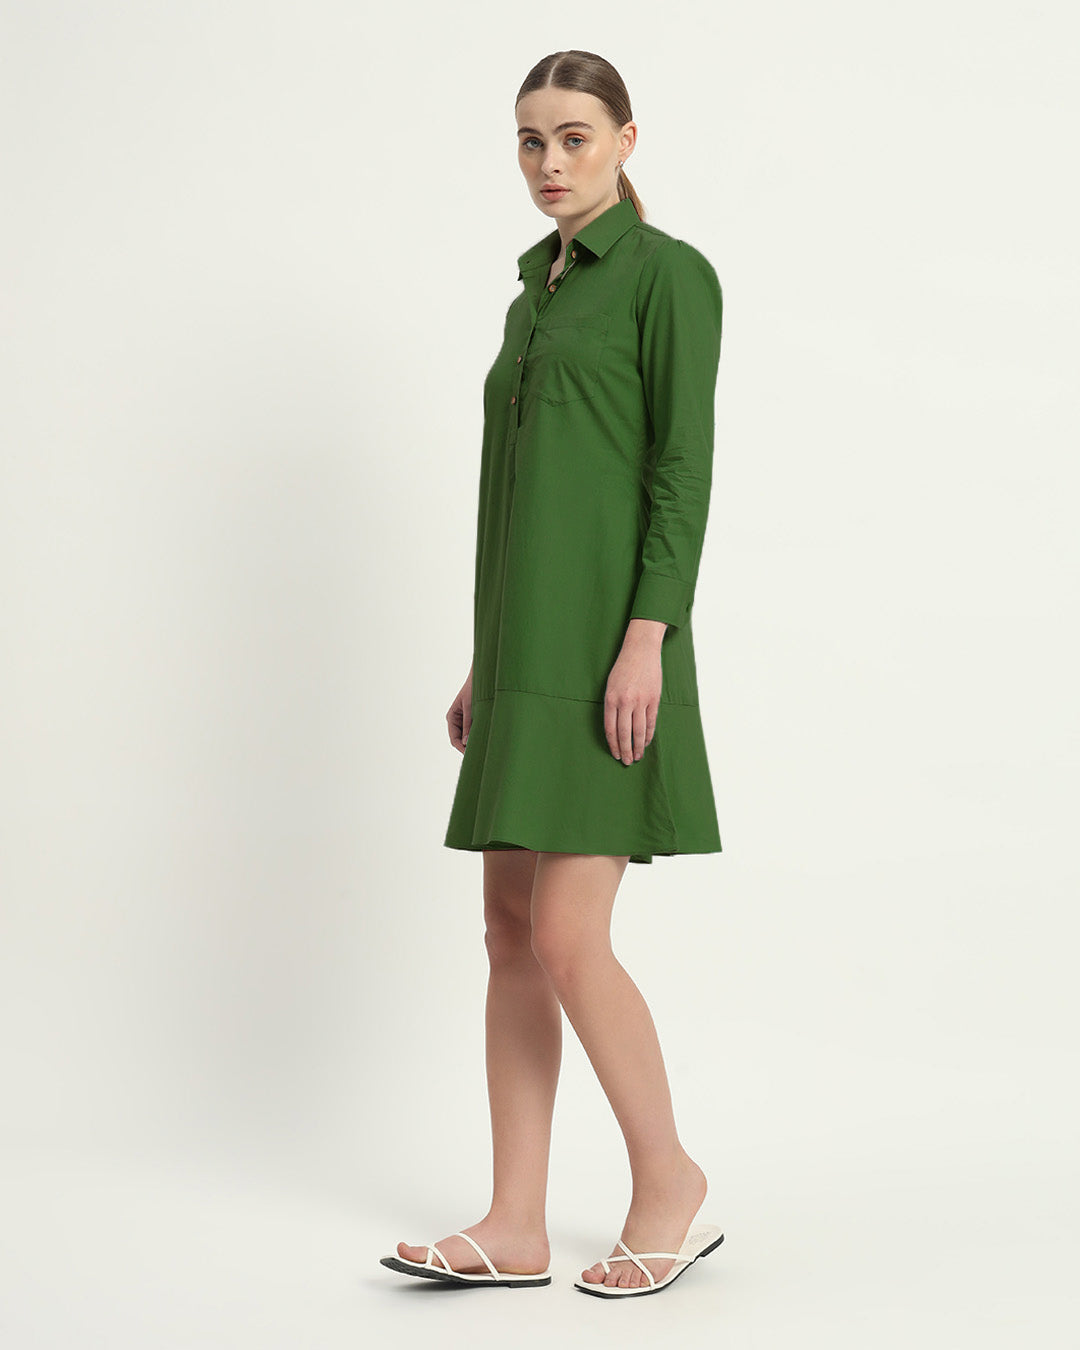 The Emerald Medina Cotton Dress